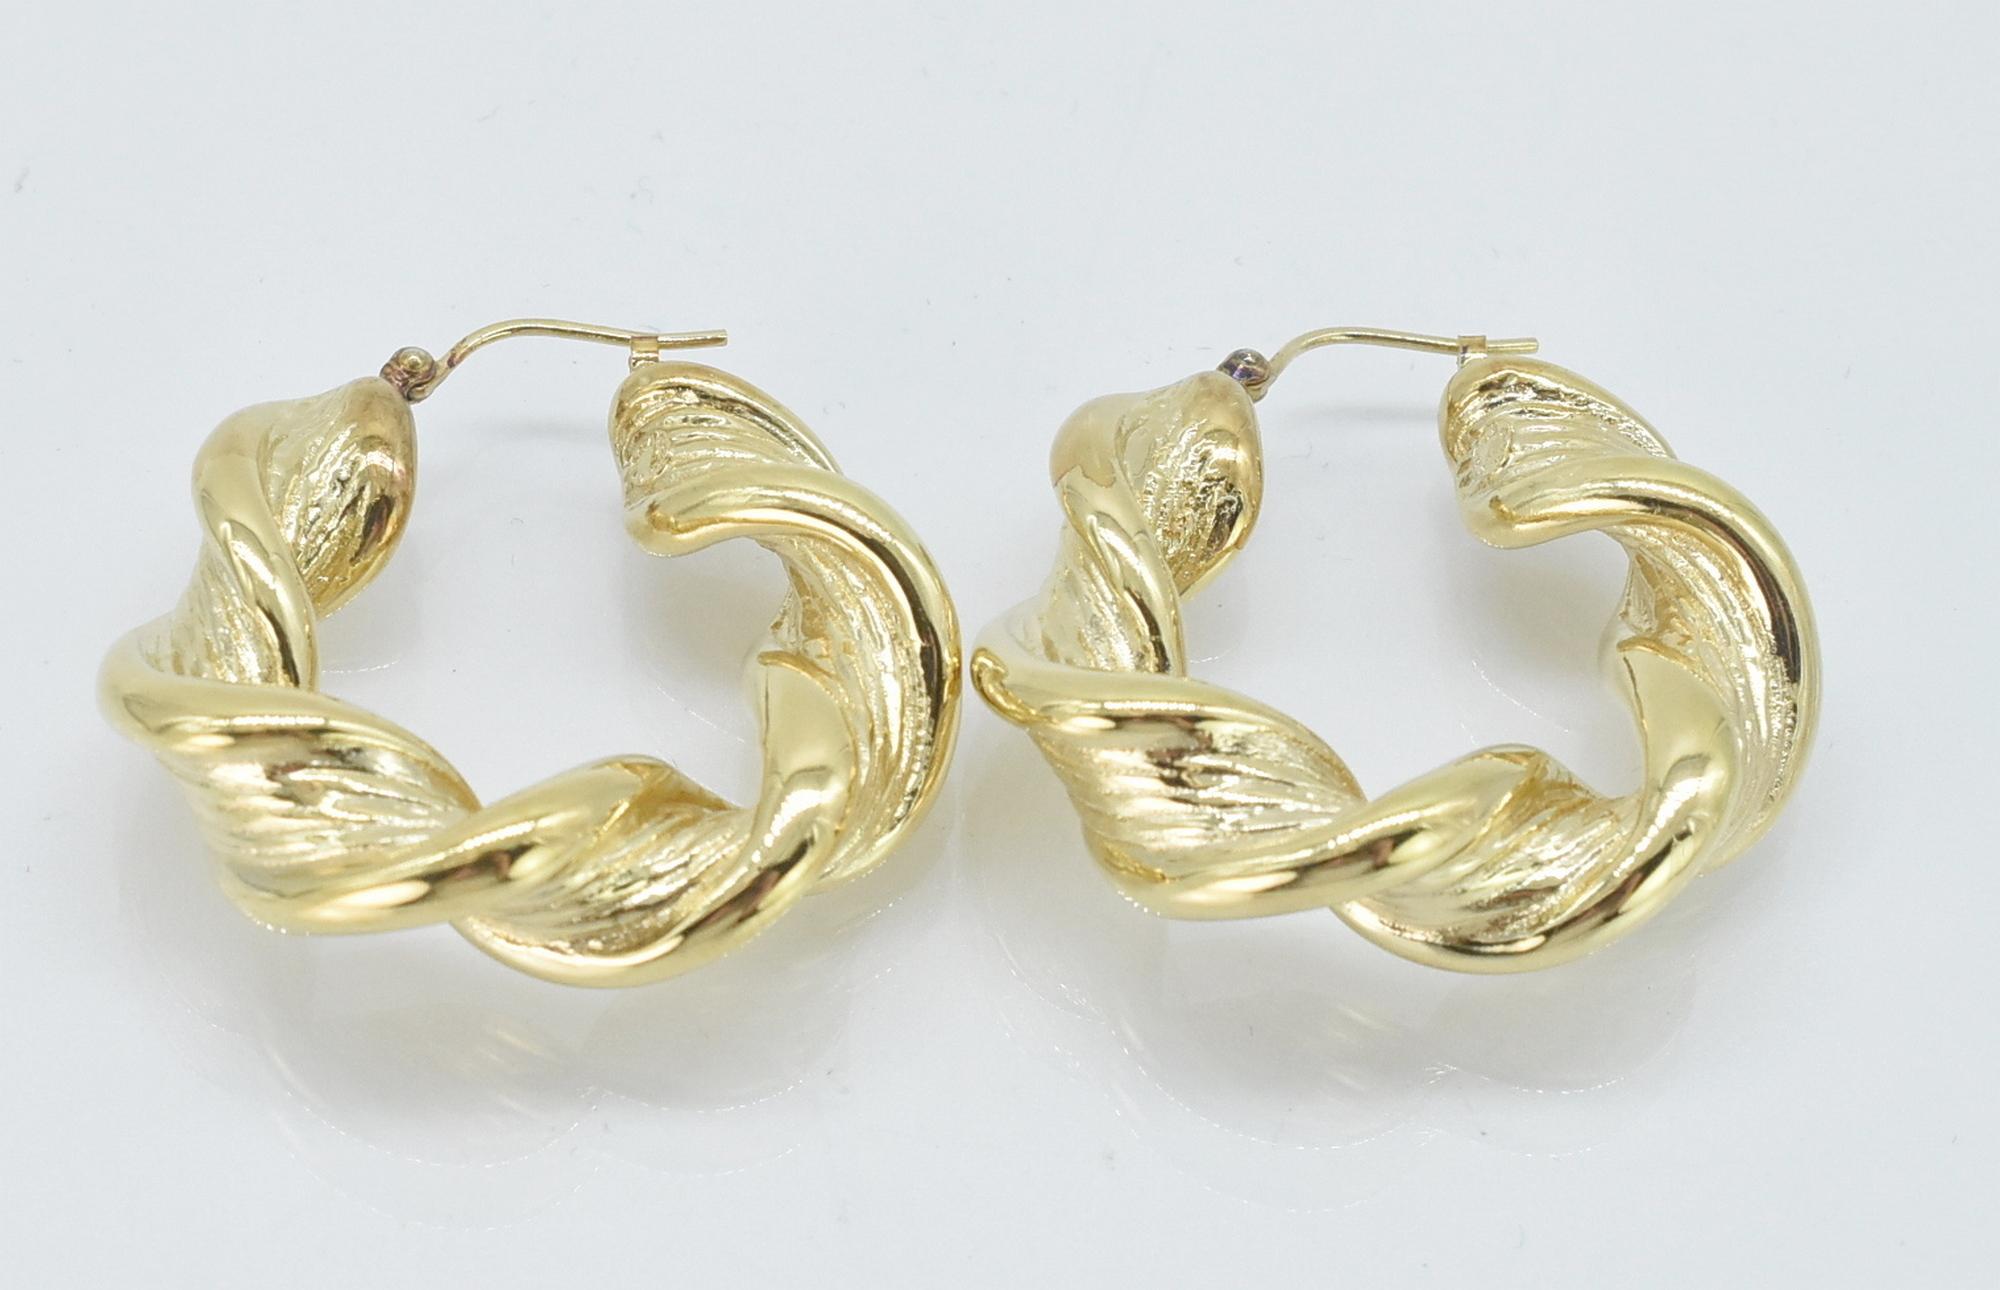 14K yellow gold hoop earrings. 14K yellow gold hoop earrings, twisted design. 1 3/8